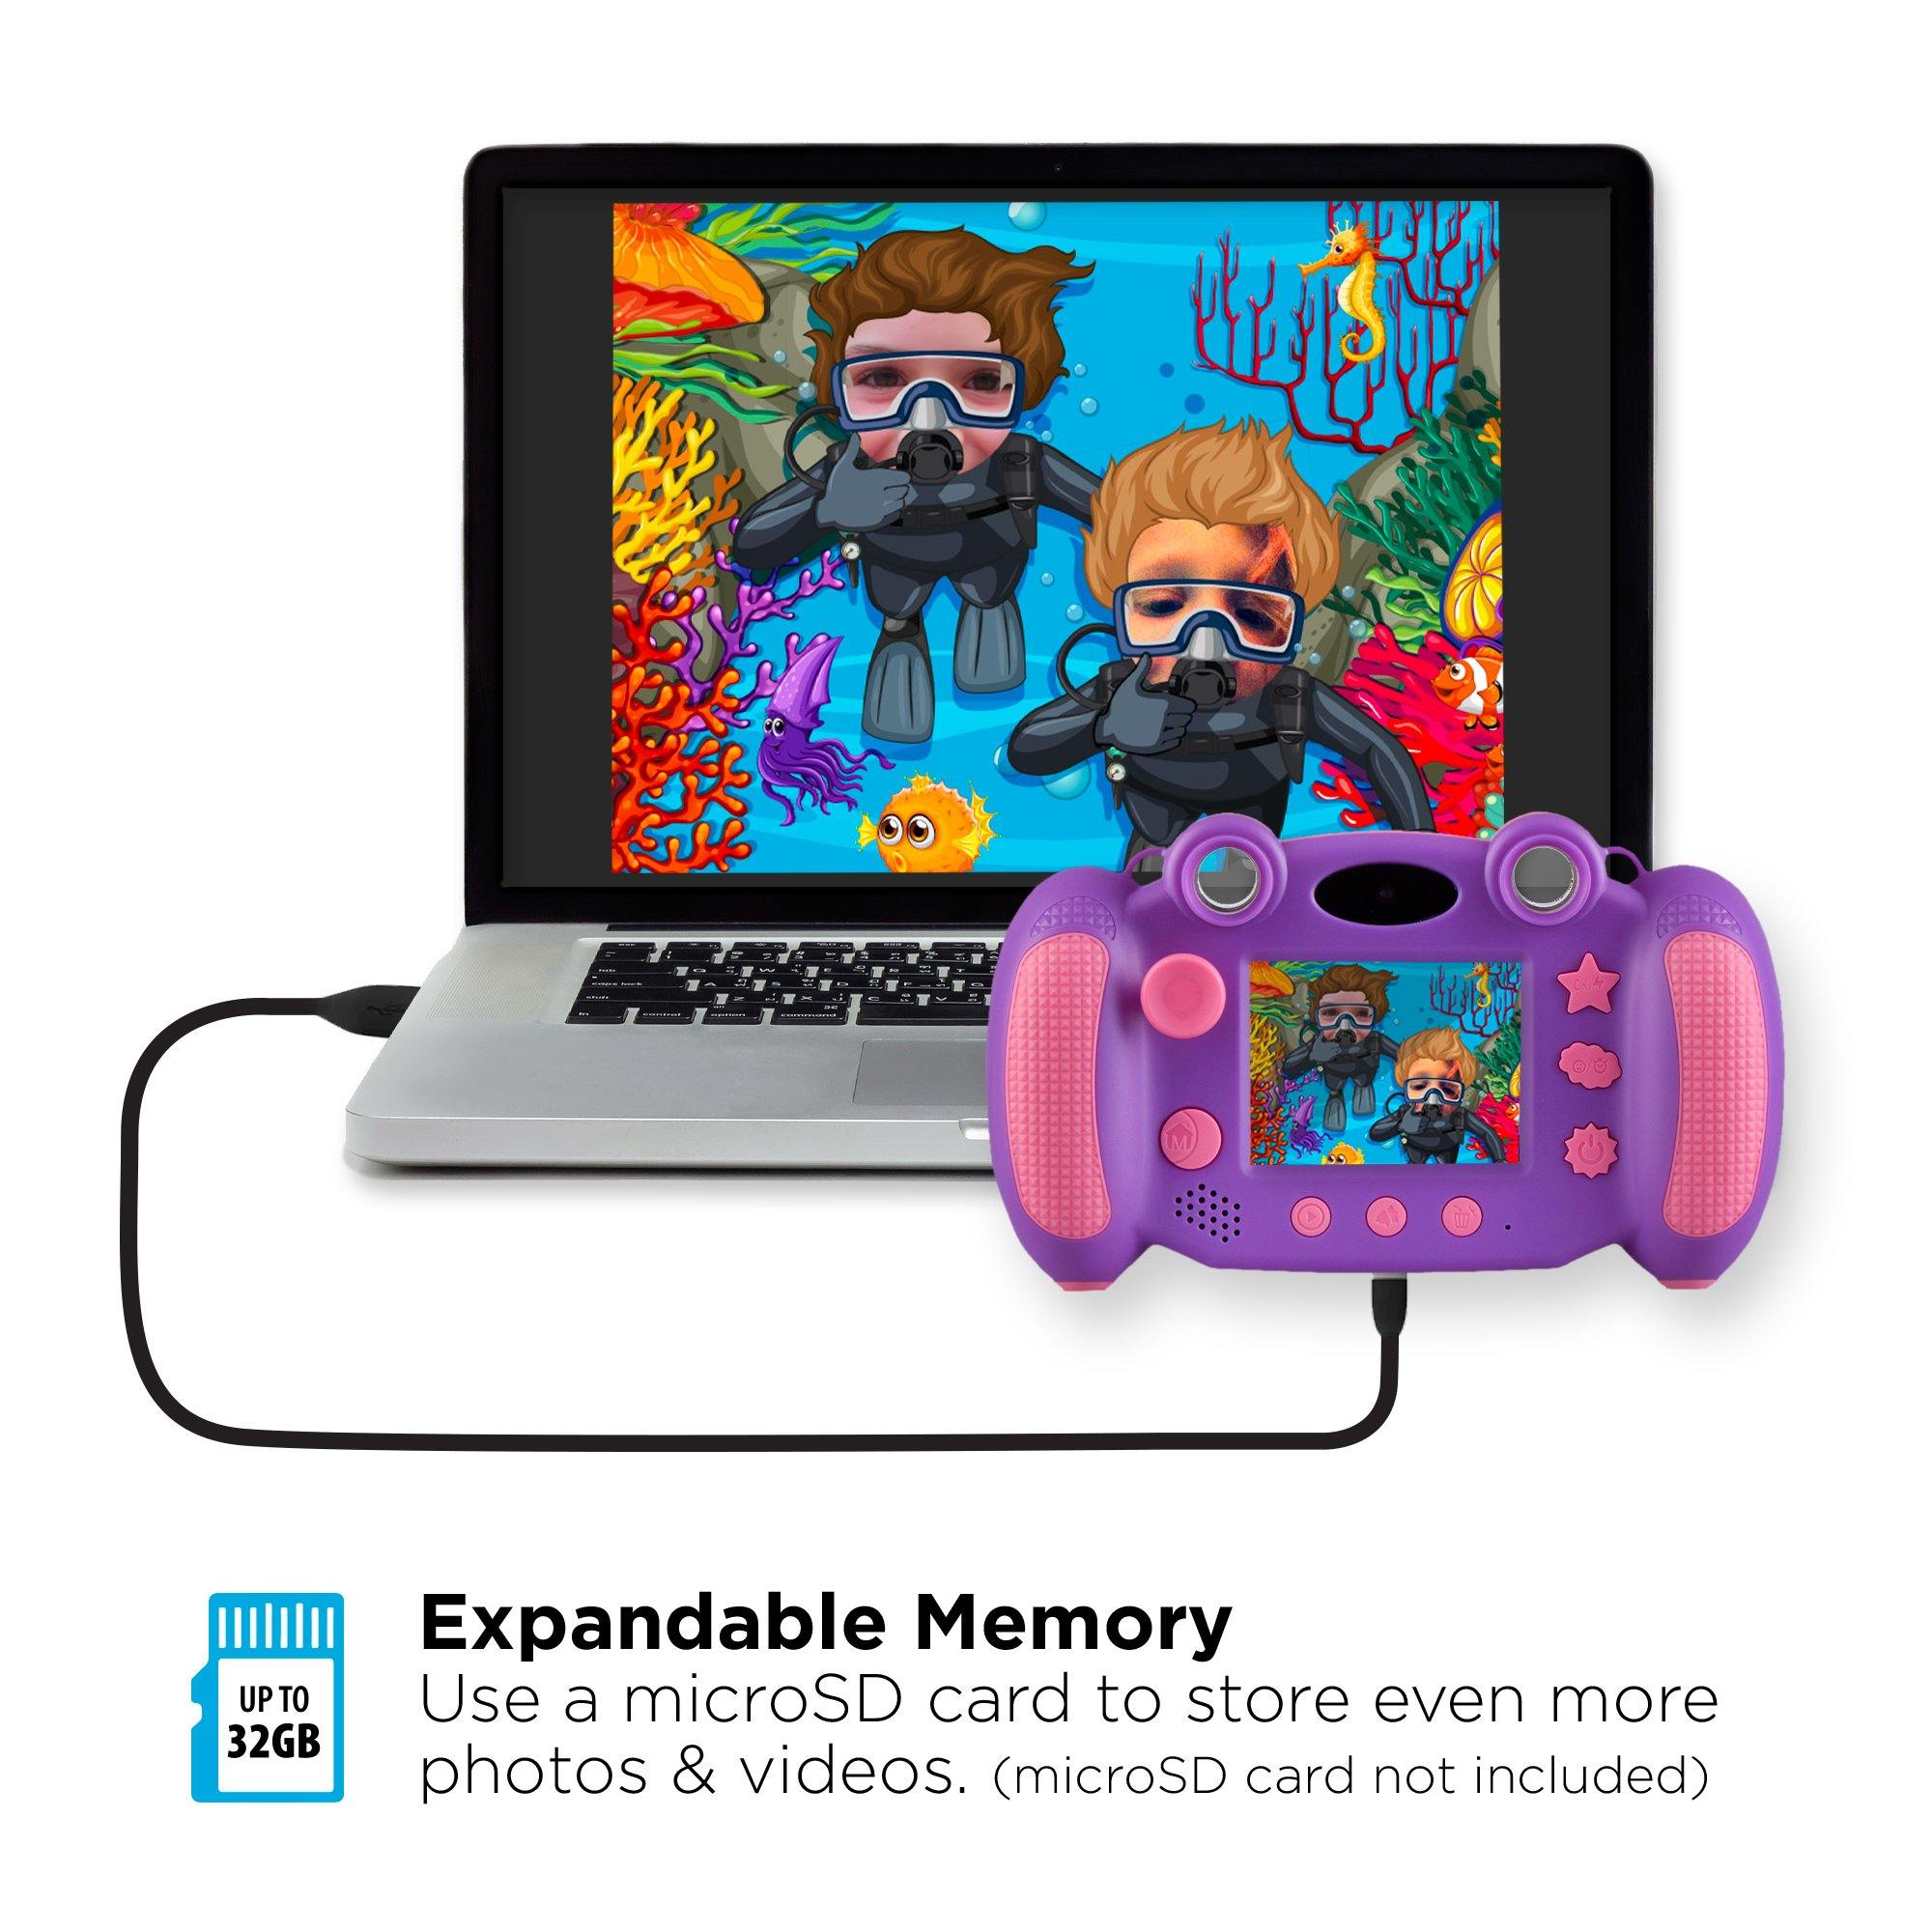 PlayZoom Snapcam Duo, Purple affordable snapcam